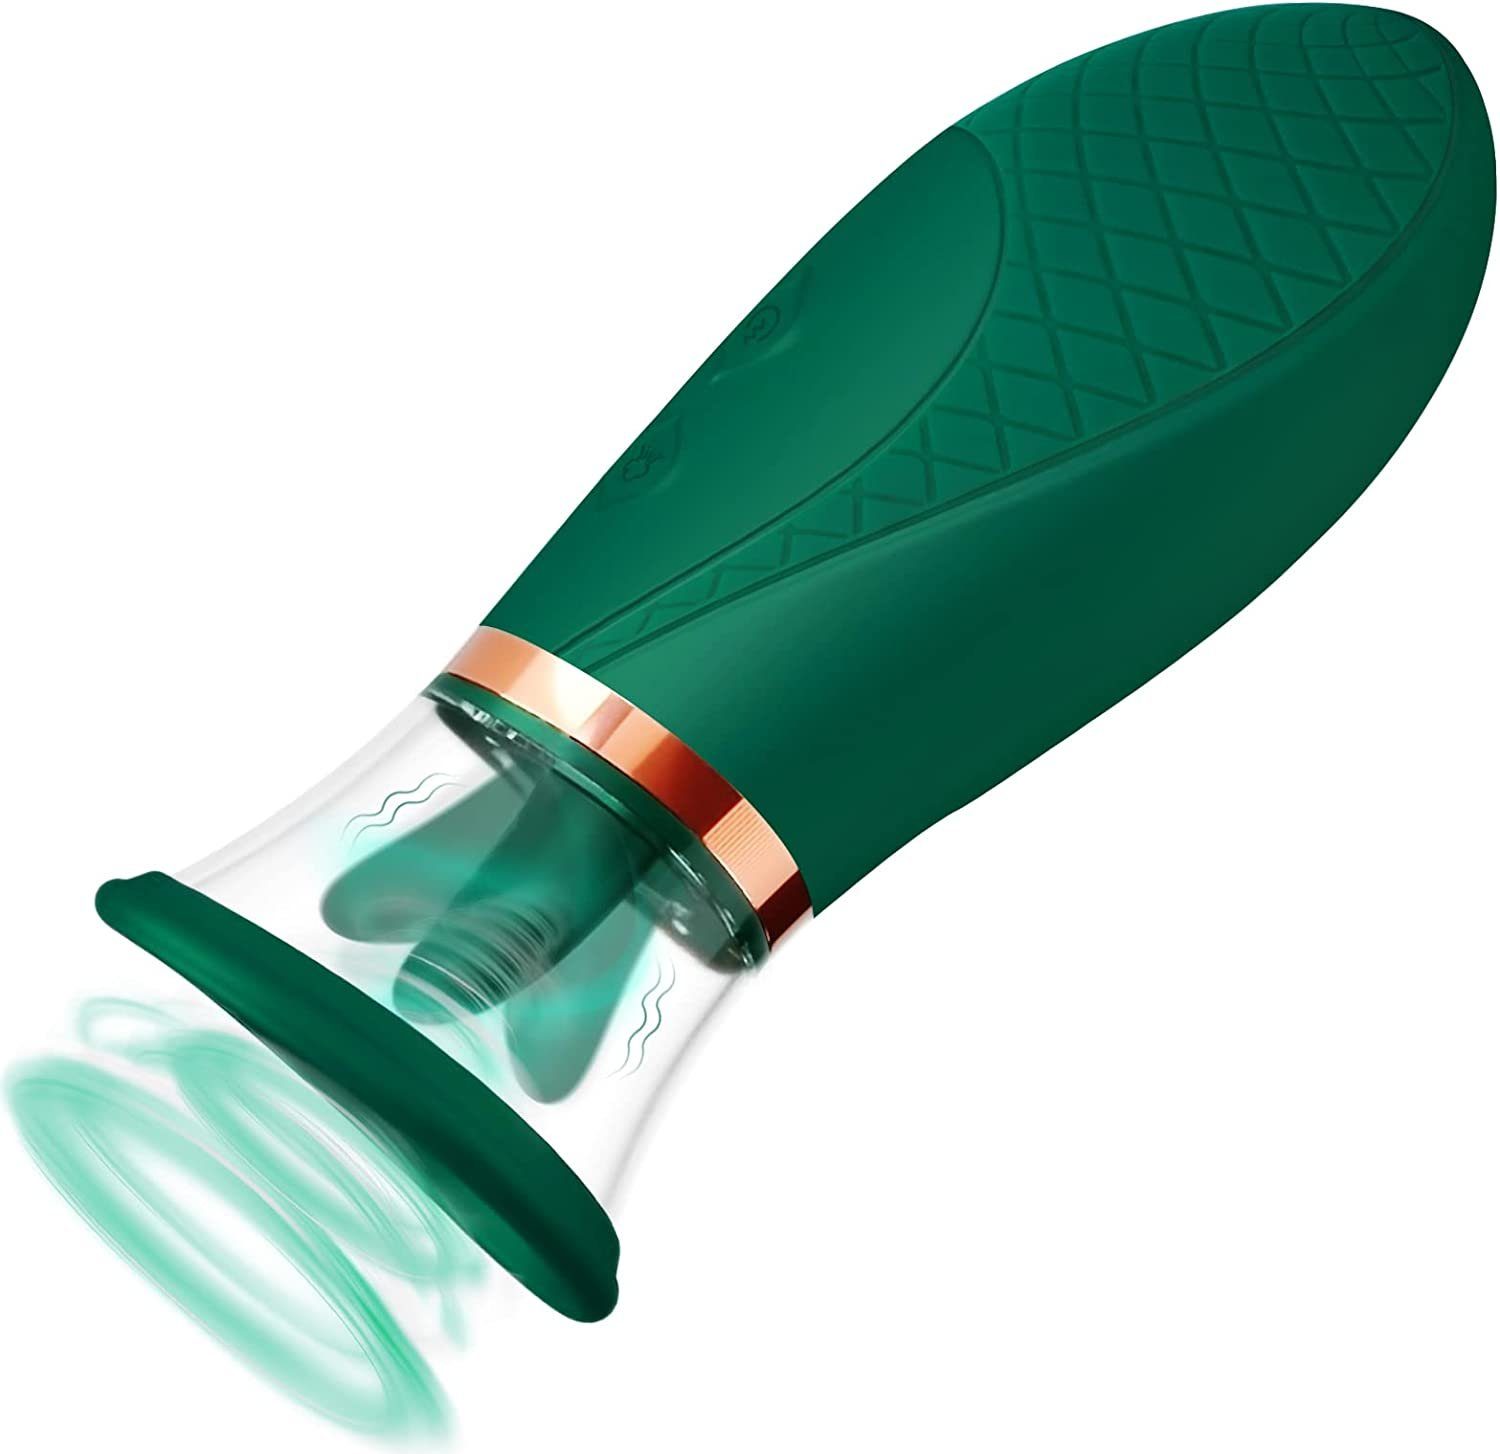 Stimulator, und Zunge Sauger 9 Mit Klitoris-Stimulator Lecken Vibrator,Zunge 3 autolock Nippel Saugenmodis Klitoris Frequenzmodi,Auflege-Vibrator